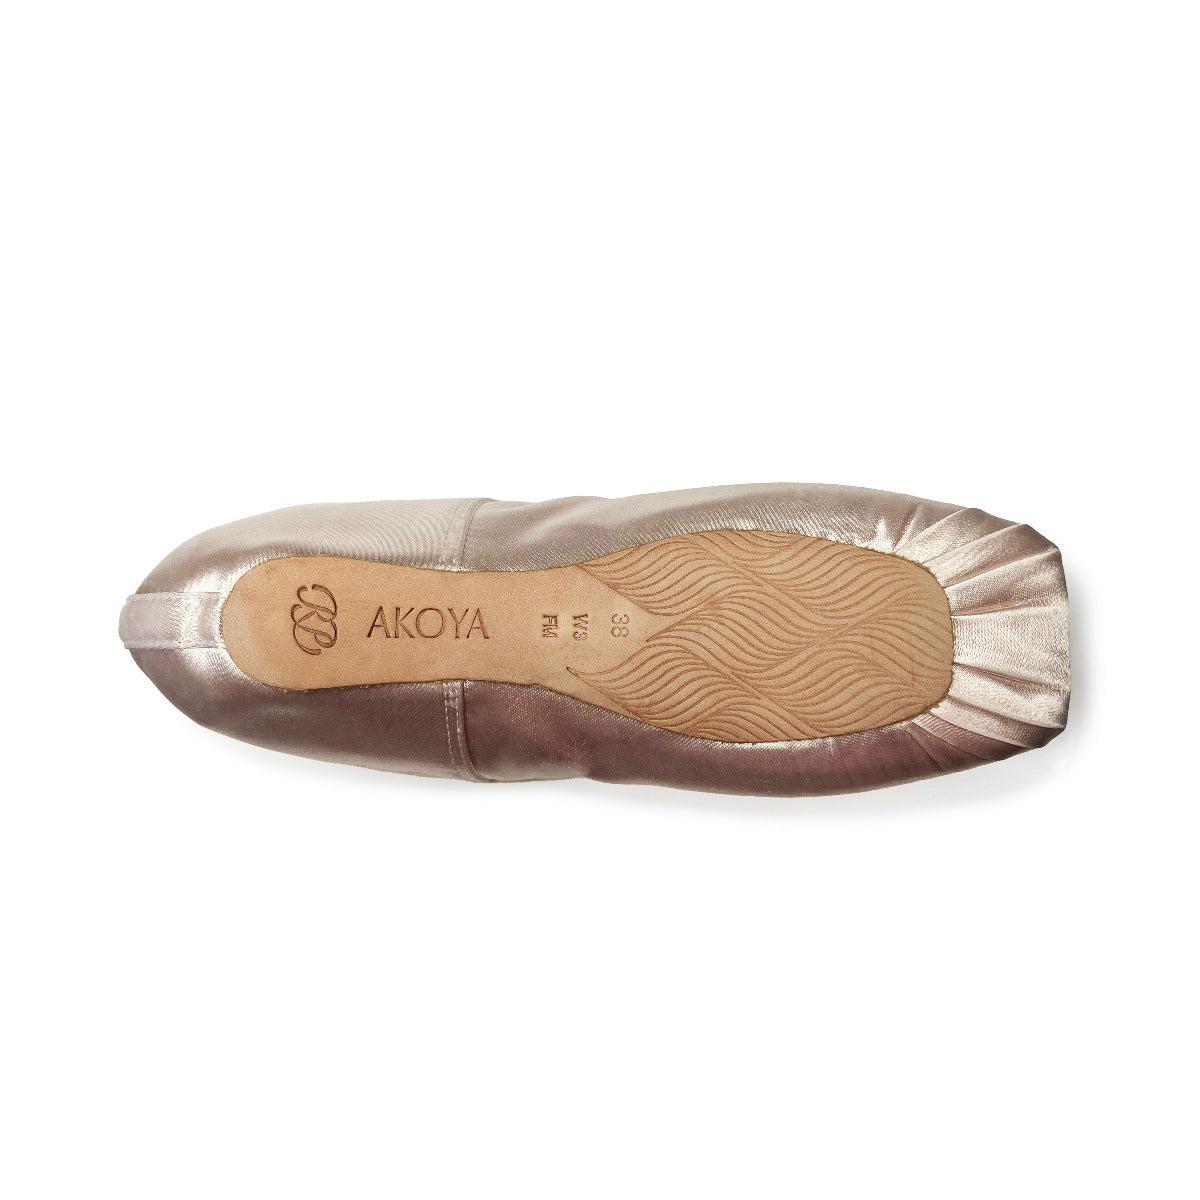 RP Akoya Pointe Shoe